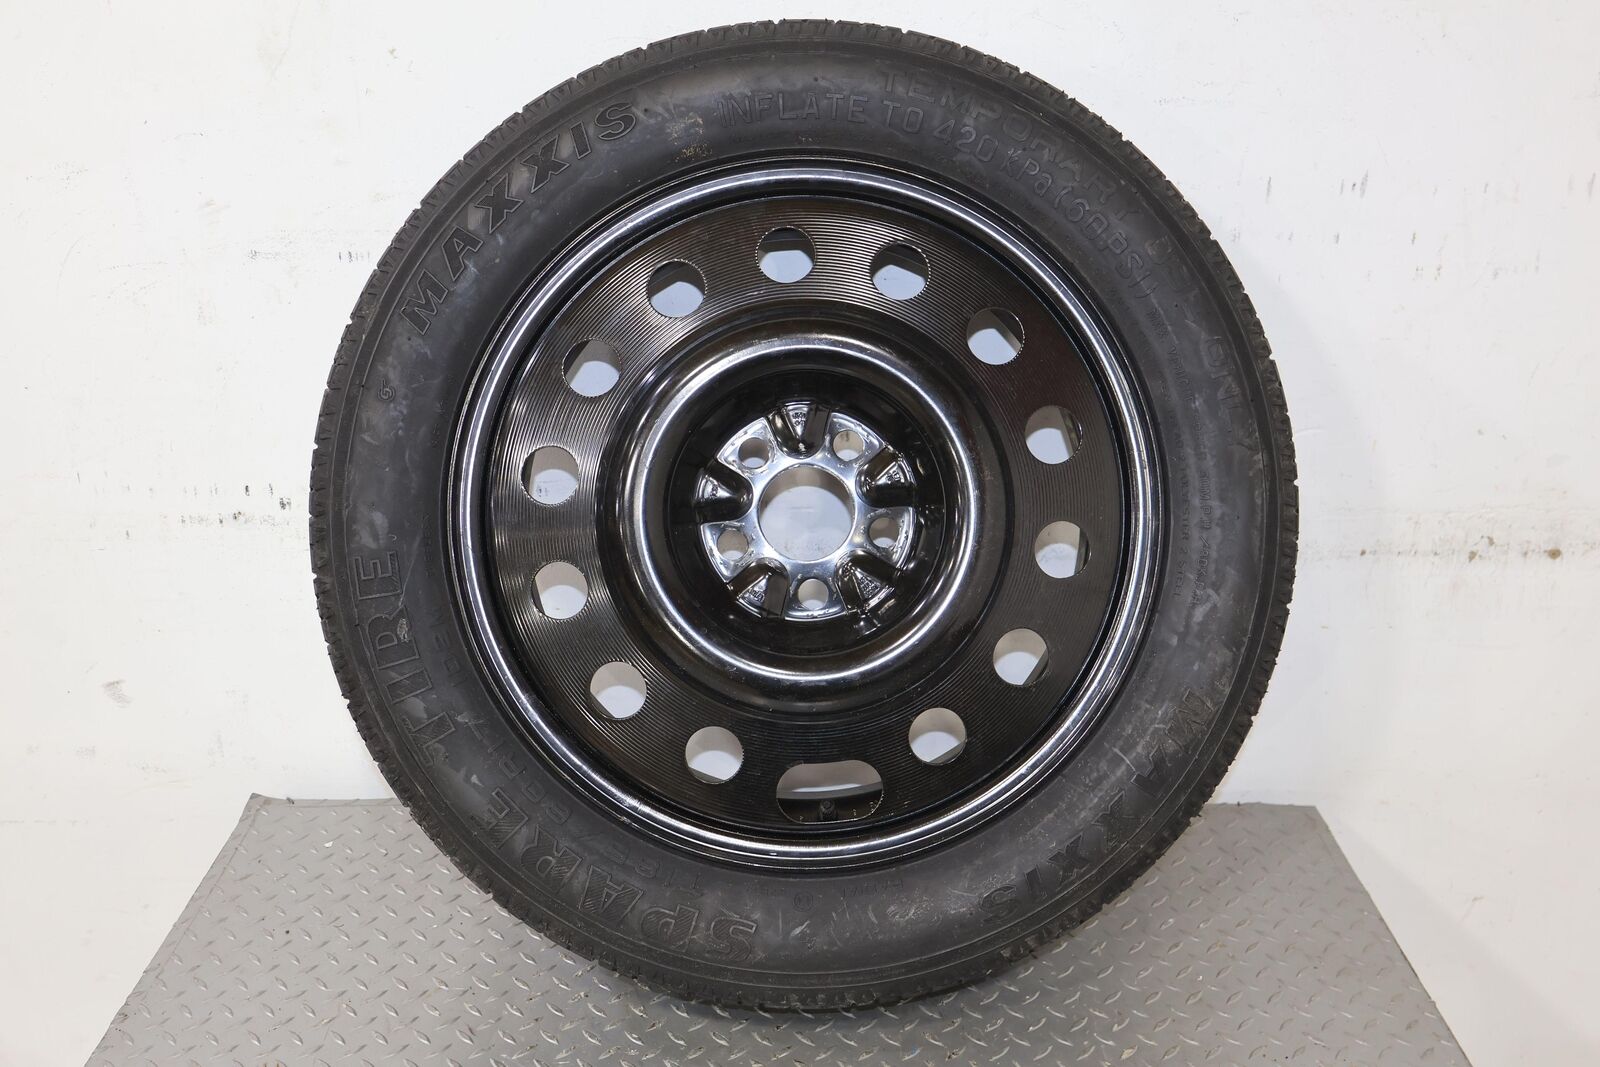 02-05 Ford Thunderbird 17x5Aluminum Compact Spare Wheel W/Temporary Tire